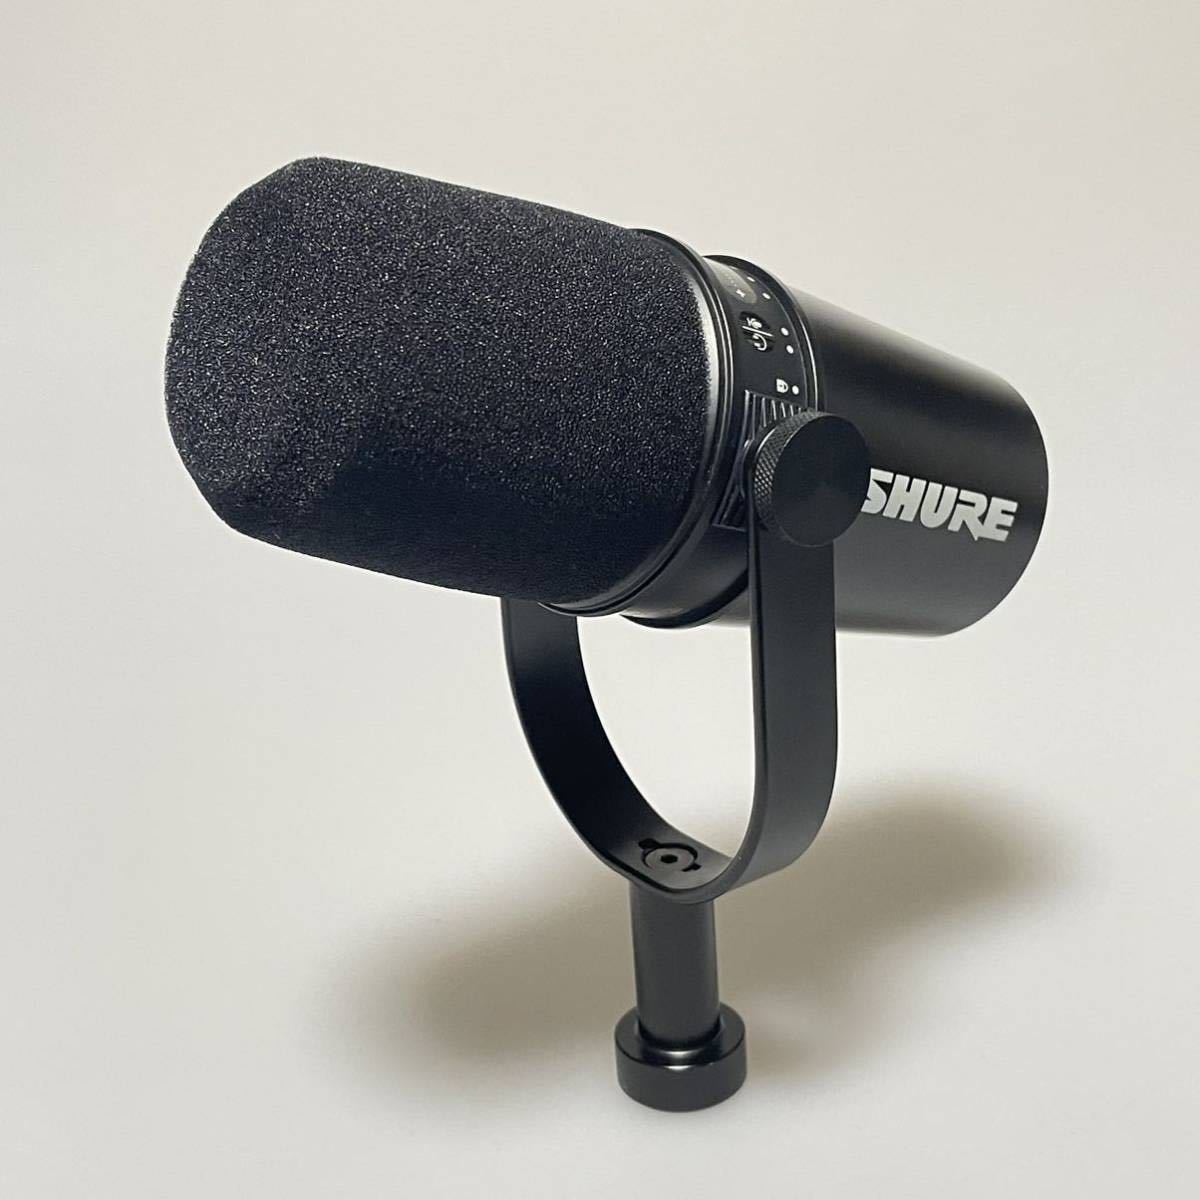 Shure MV7-K-J electrodynamic microphone : Real Yahoo auction salling